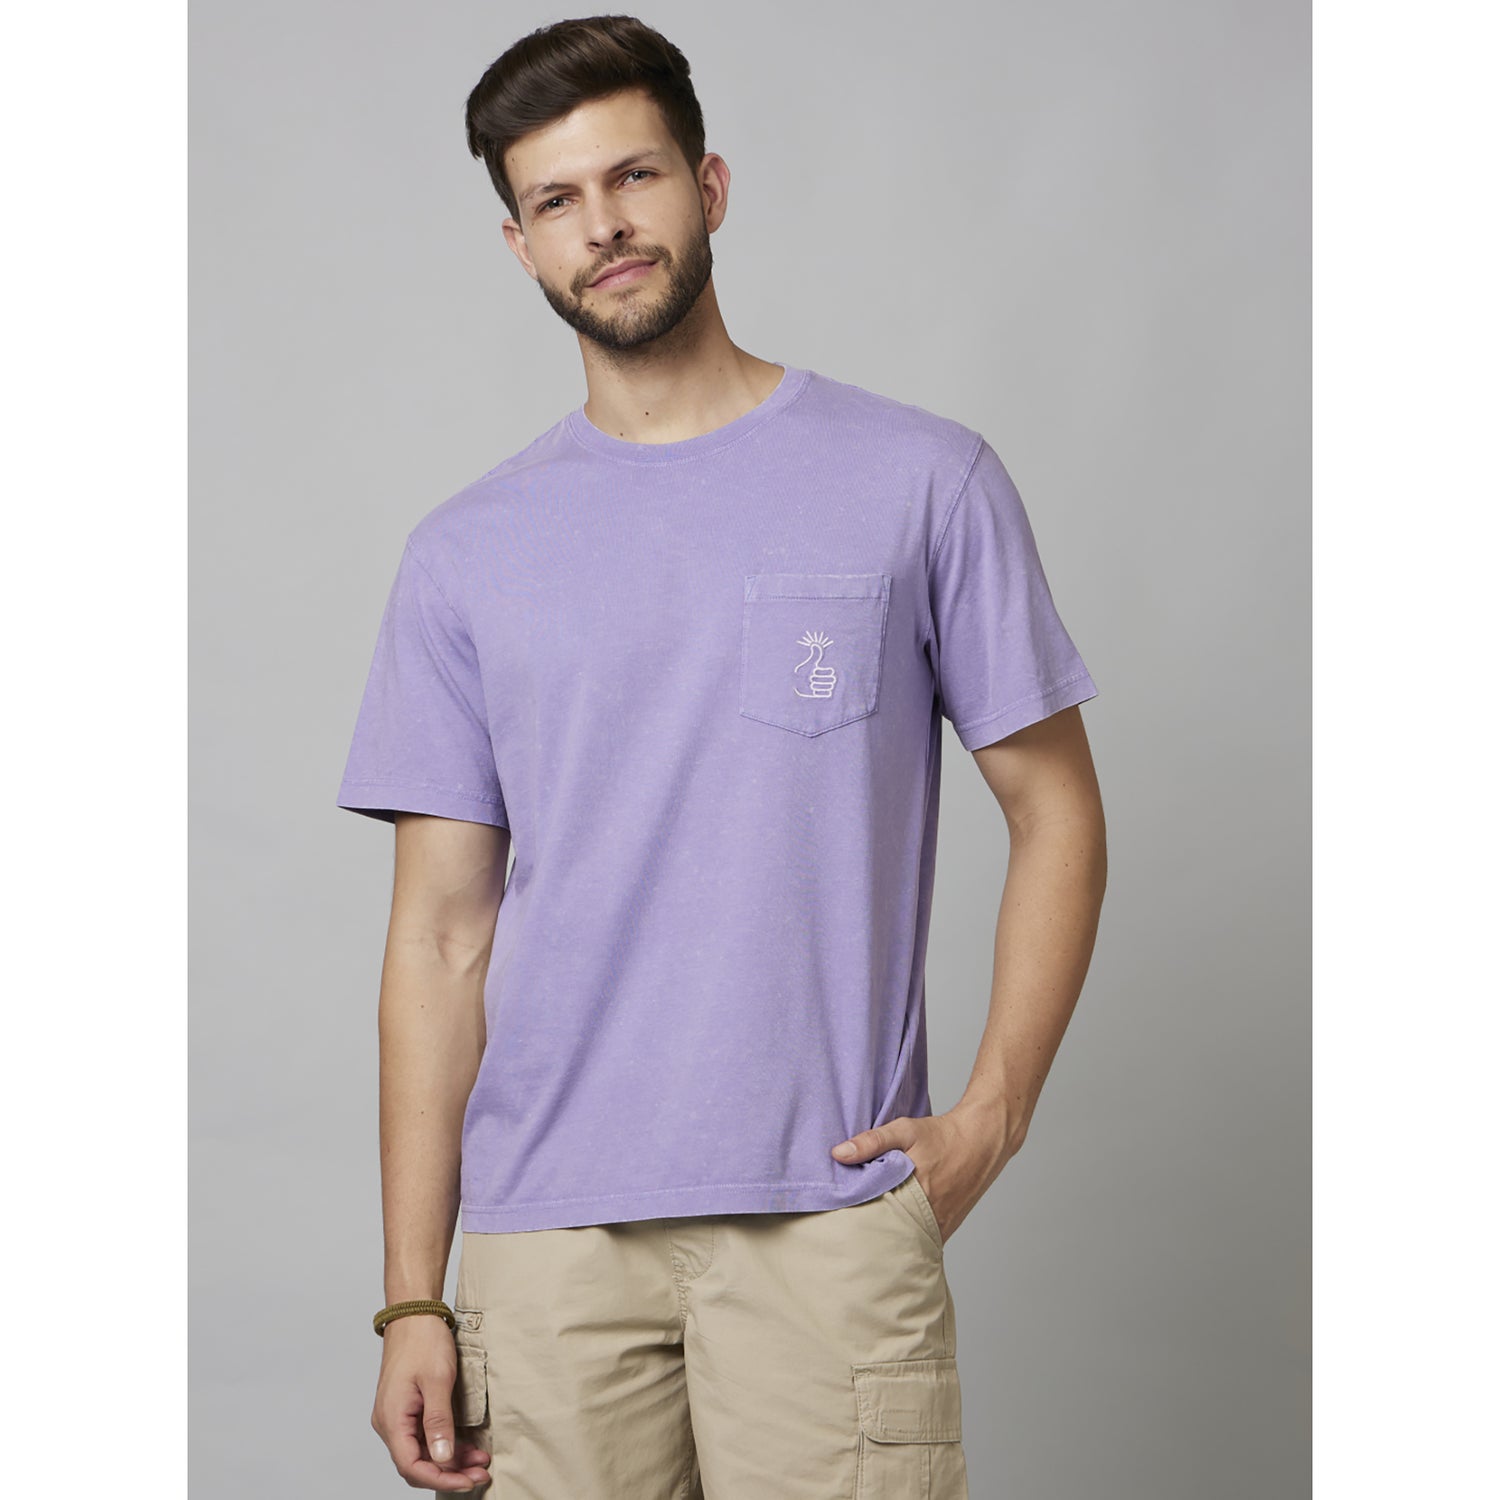 Mauve Embroidered Half Sleeve Cotton T-Shirts (FECIDE)